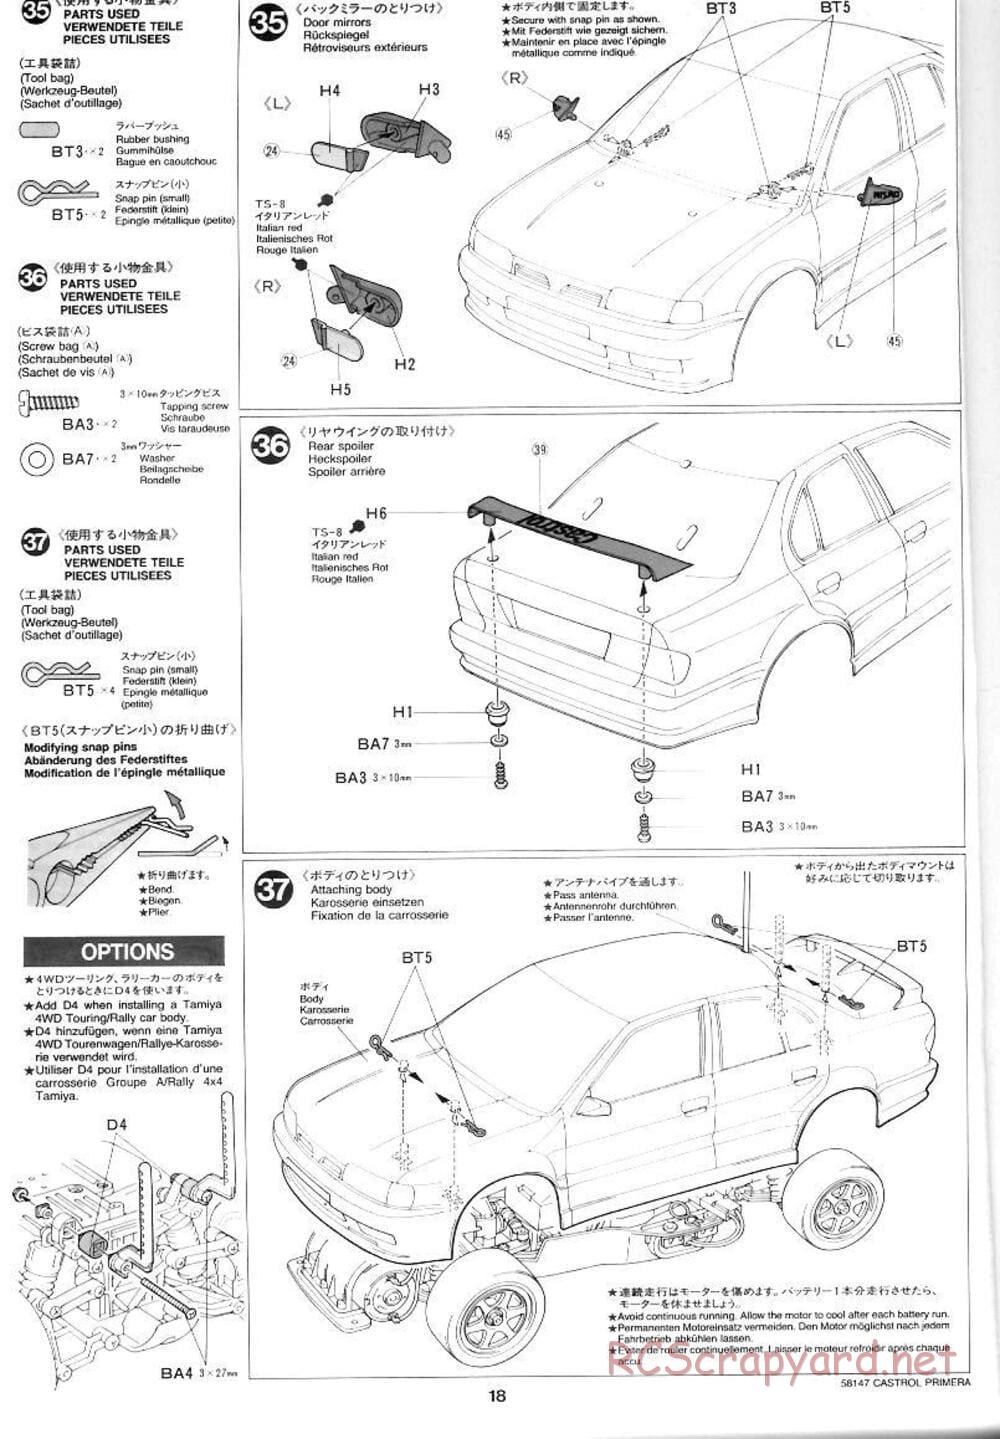 Tamiya - Castrol Nissan Primera JTCC - FF-01 Chassis - Manual - Page 18